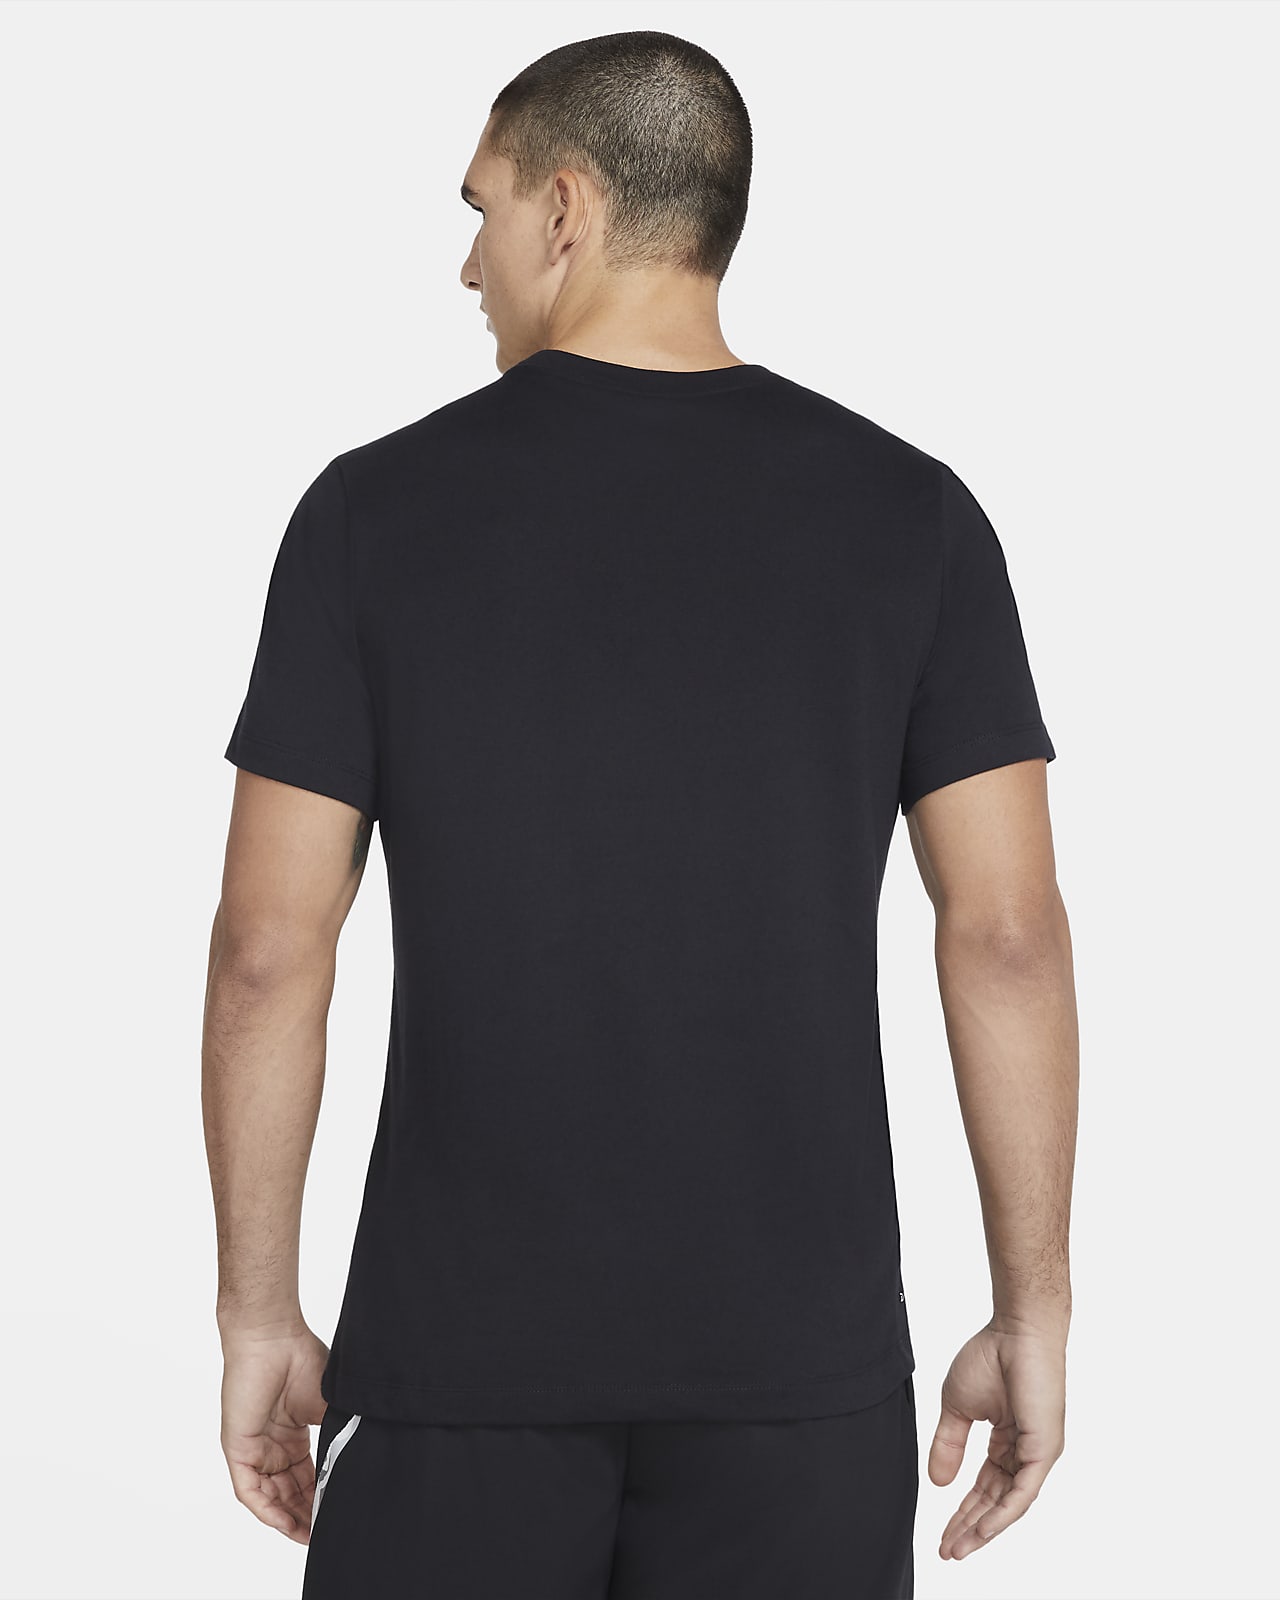 Nike Dri-FIT Hwpo Training T-Shirt - Men's Black M Regular